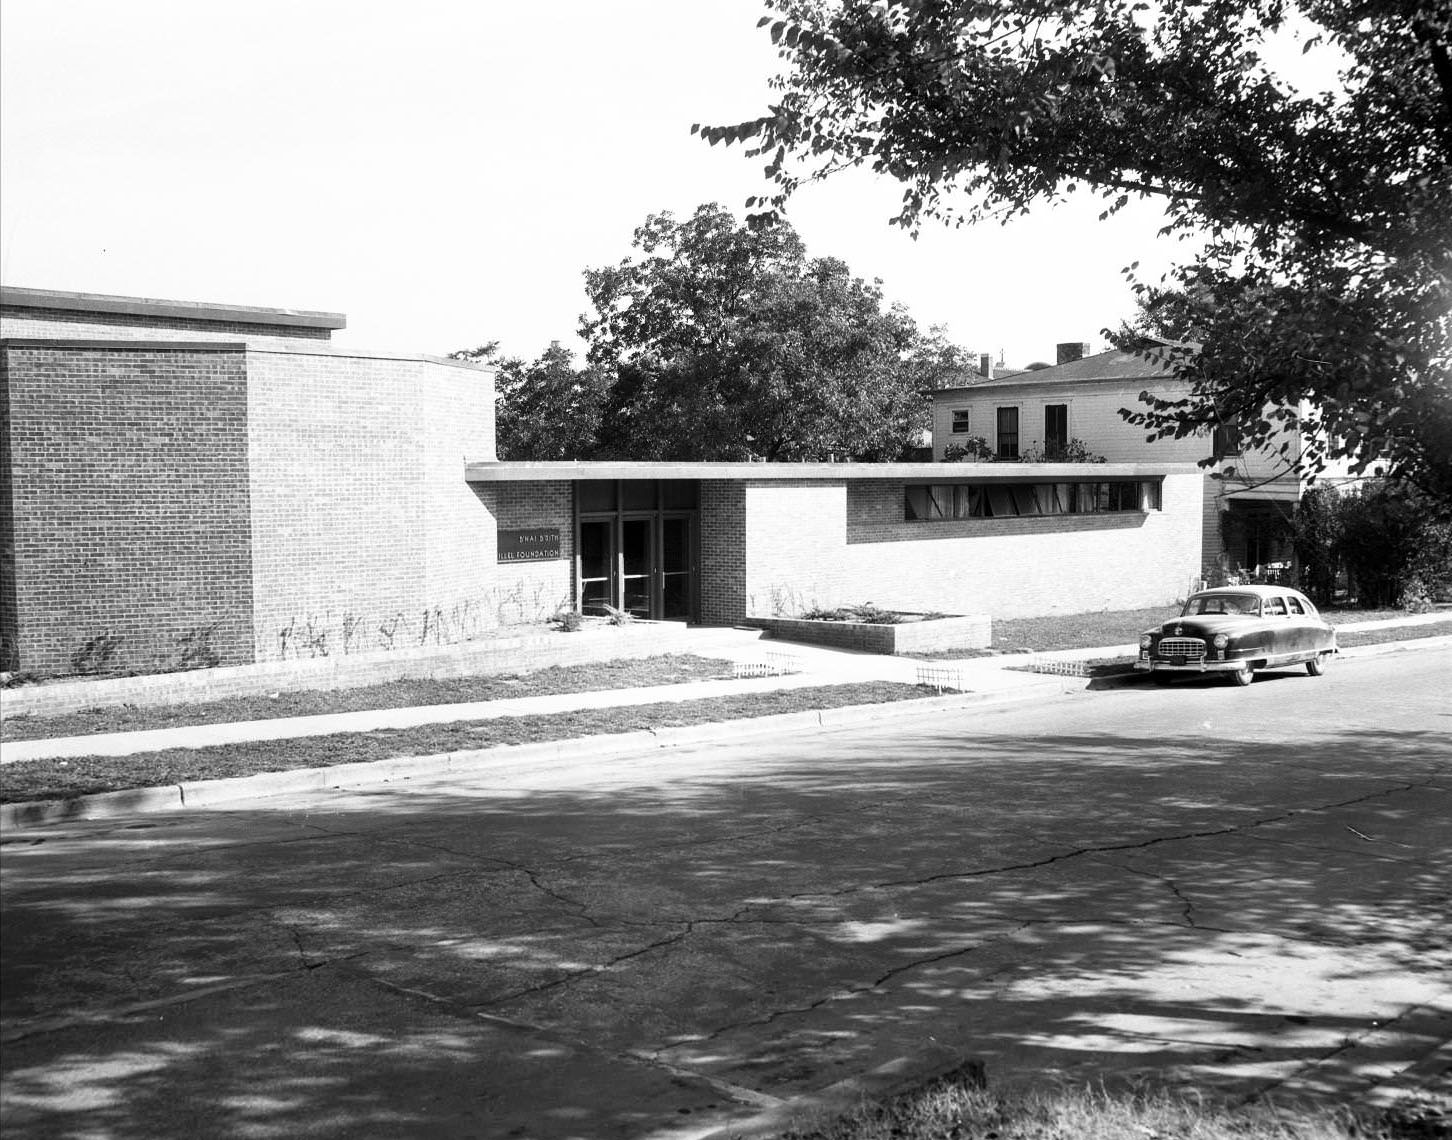 B'nai B'rith Hillel Foundation building, 1950